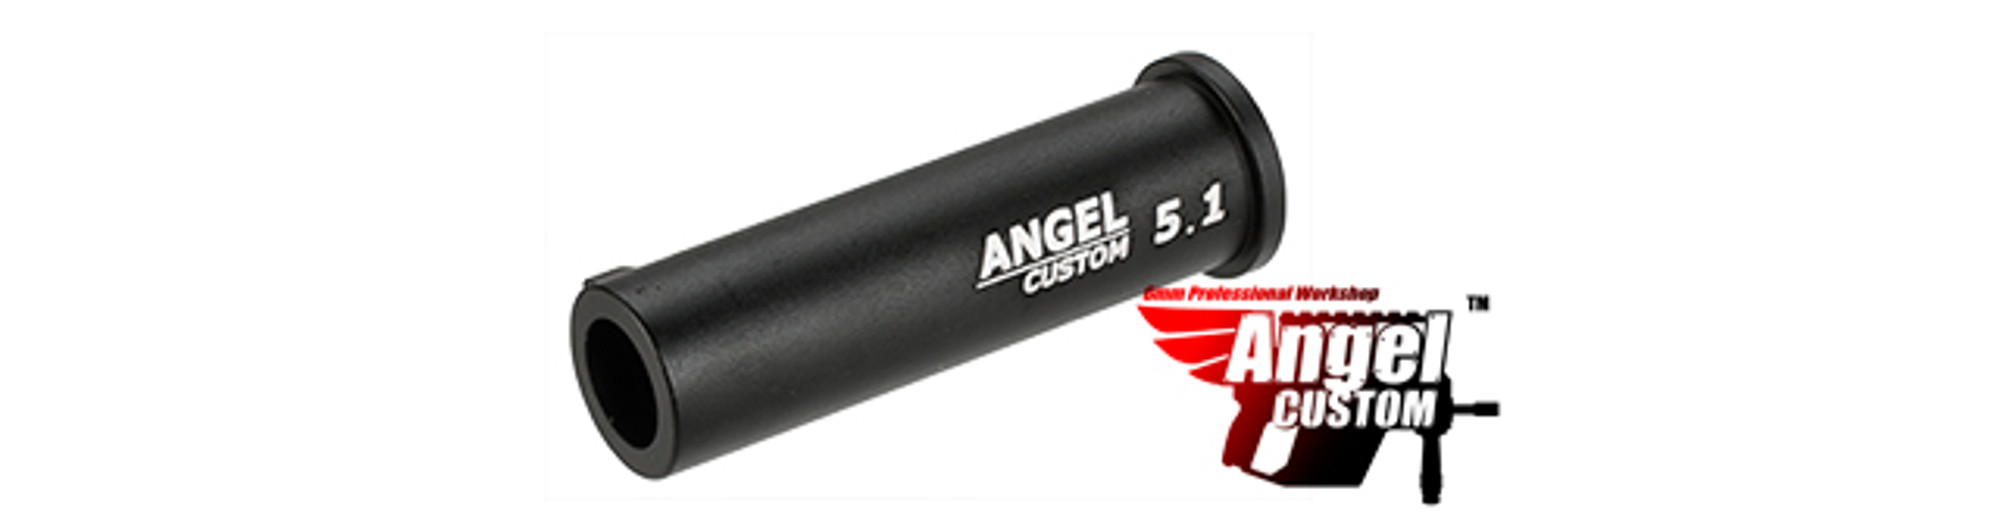 Angel Custom "SONIC" Recoil Spring Guide Plug for WE MARUI Hi-CAPA 5.1 Series Airsoft GBB